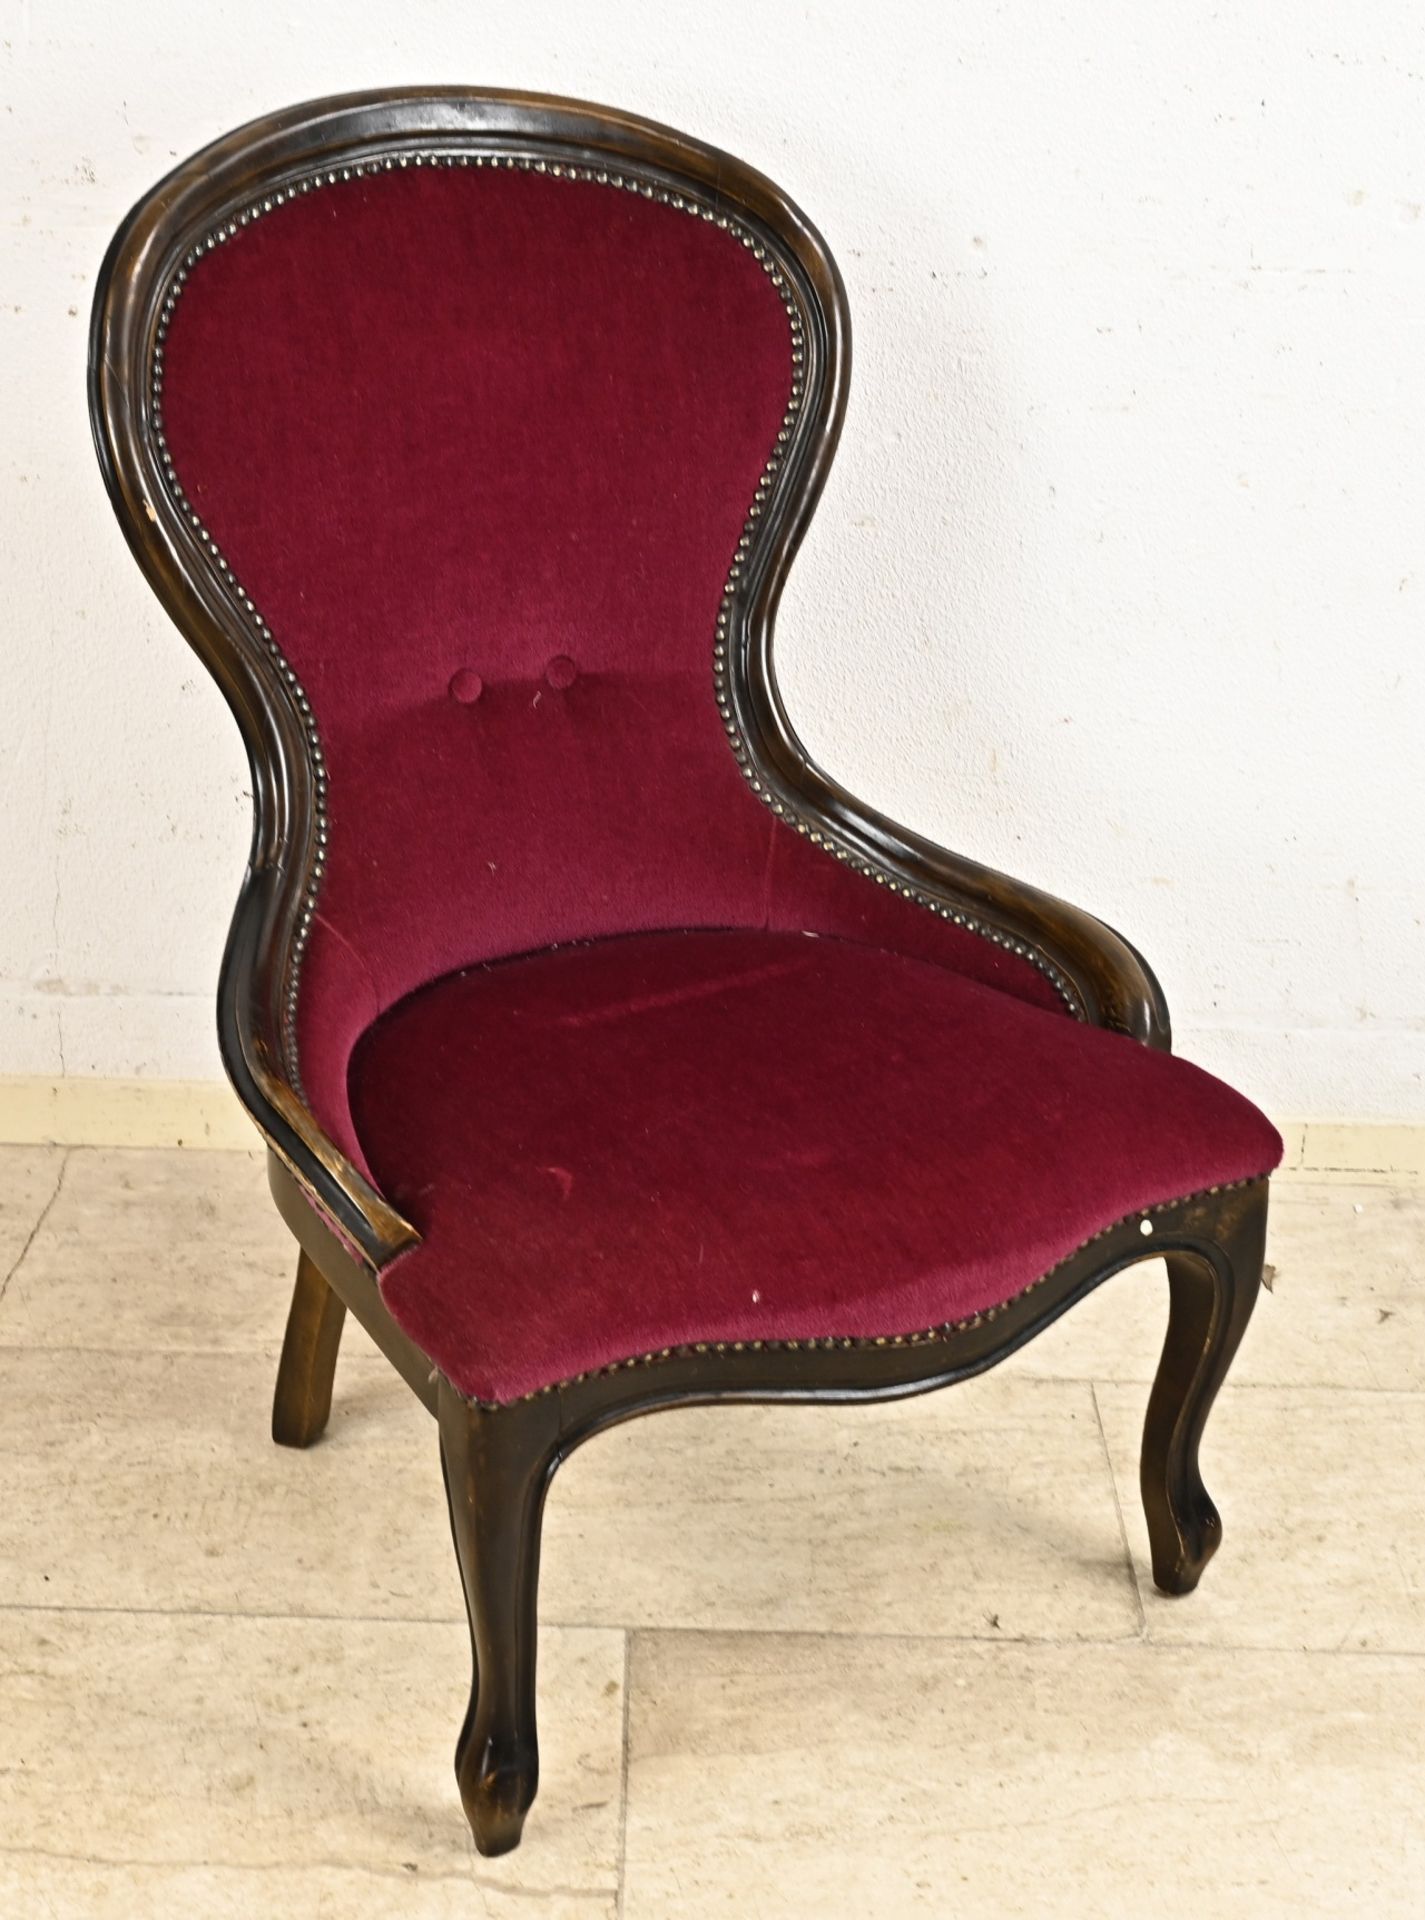 Antique craft chair, 1870